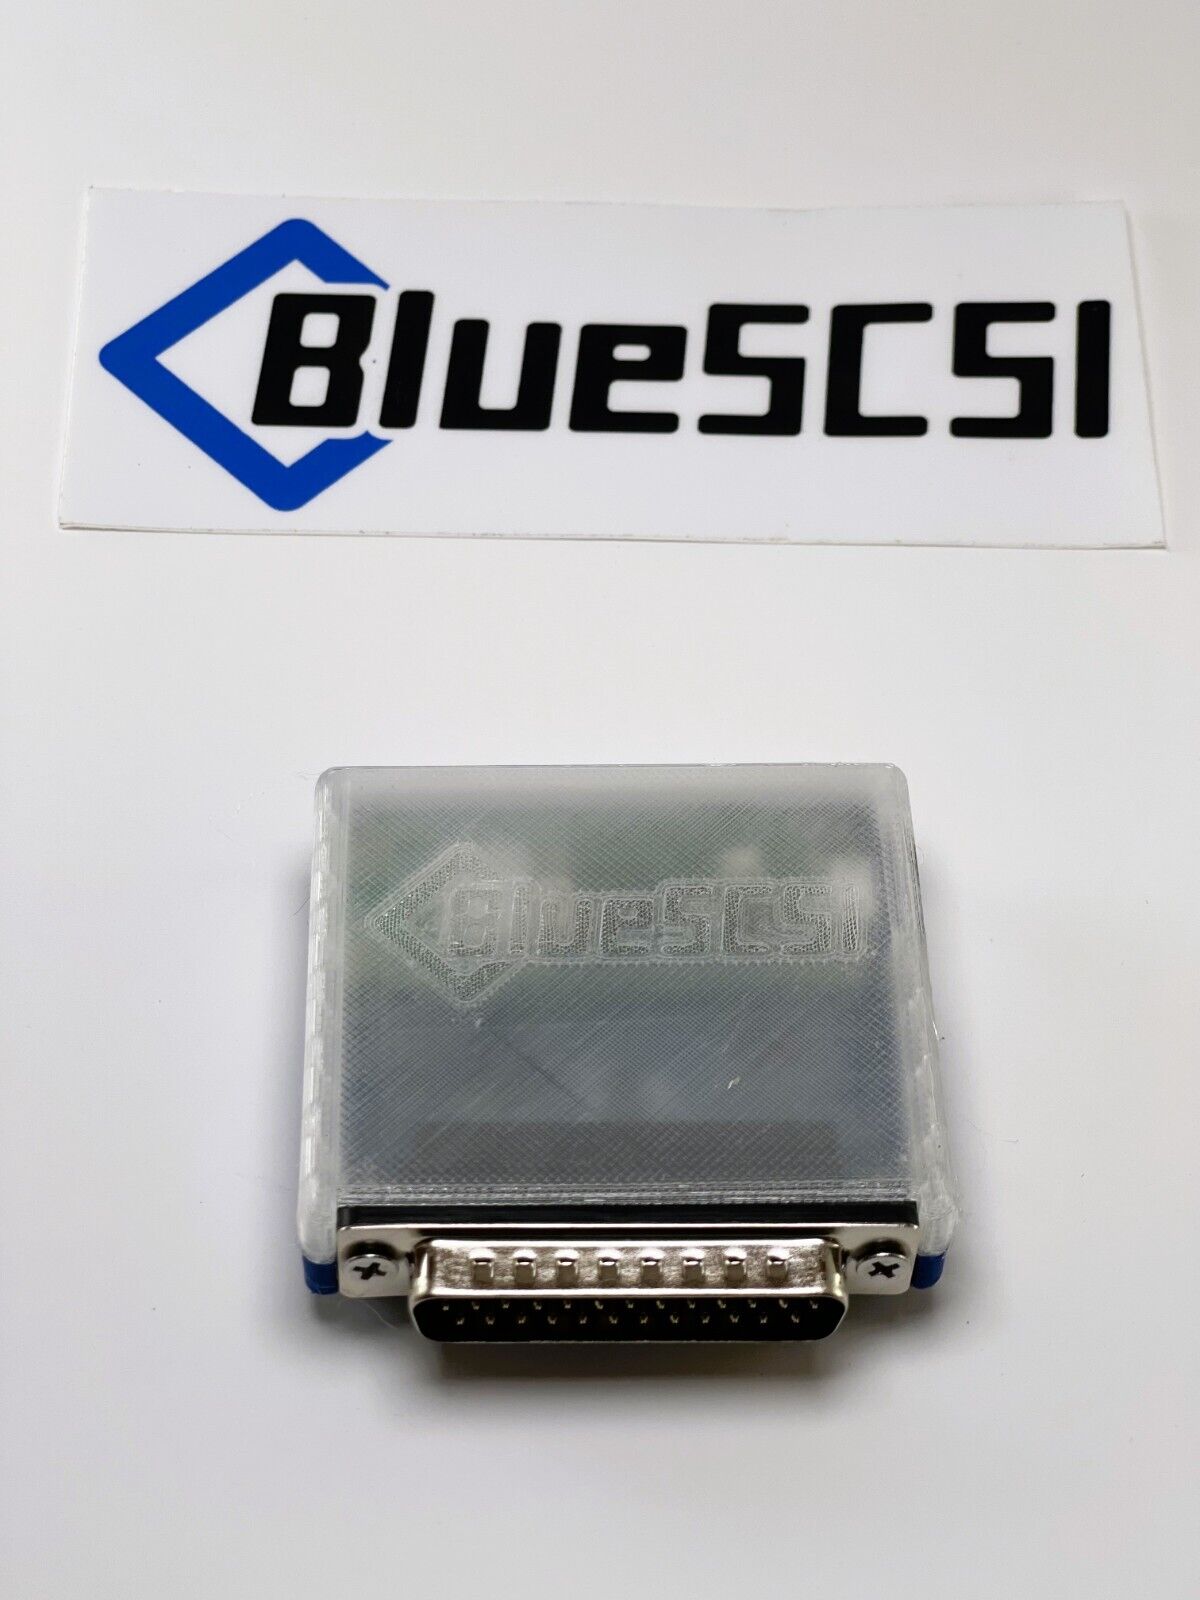 BlueSCSI V2 WiFi (Narrow DB25) - Modern Storage for Vintage Computers